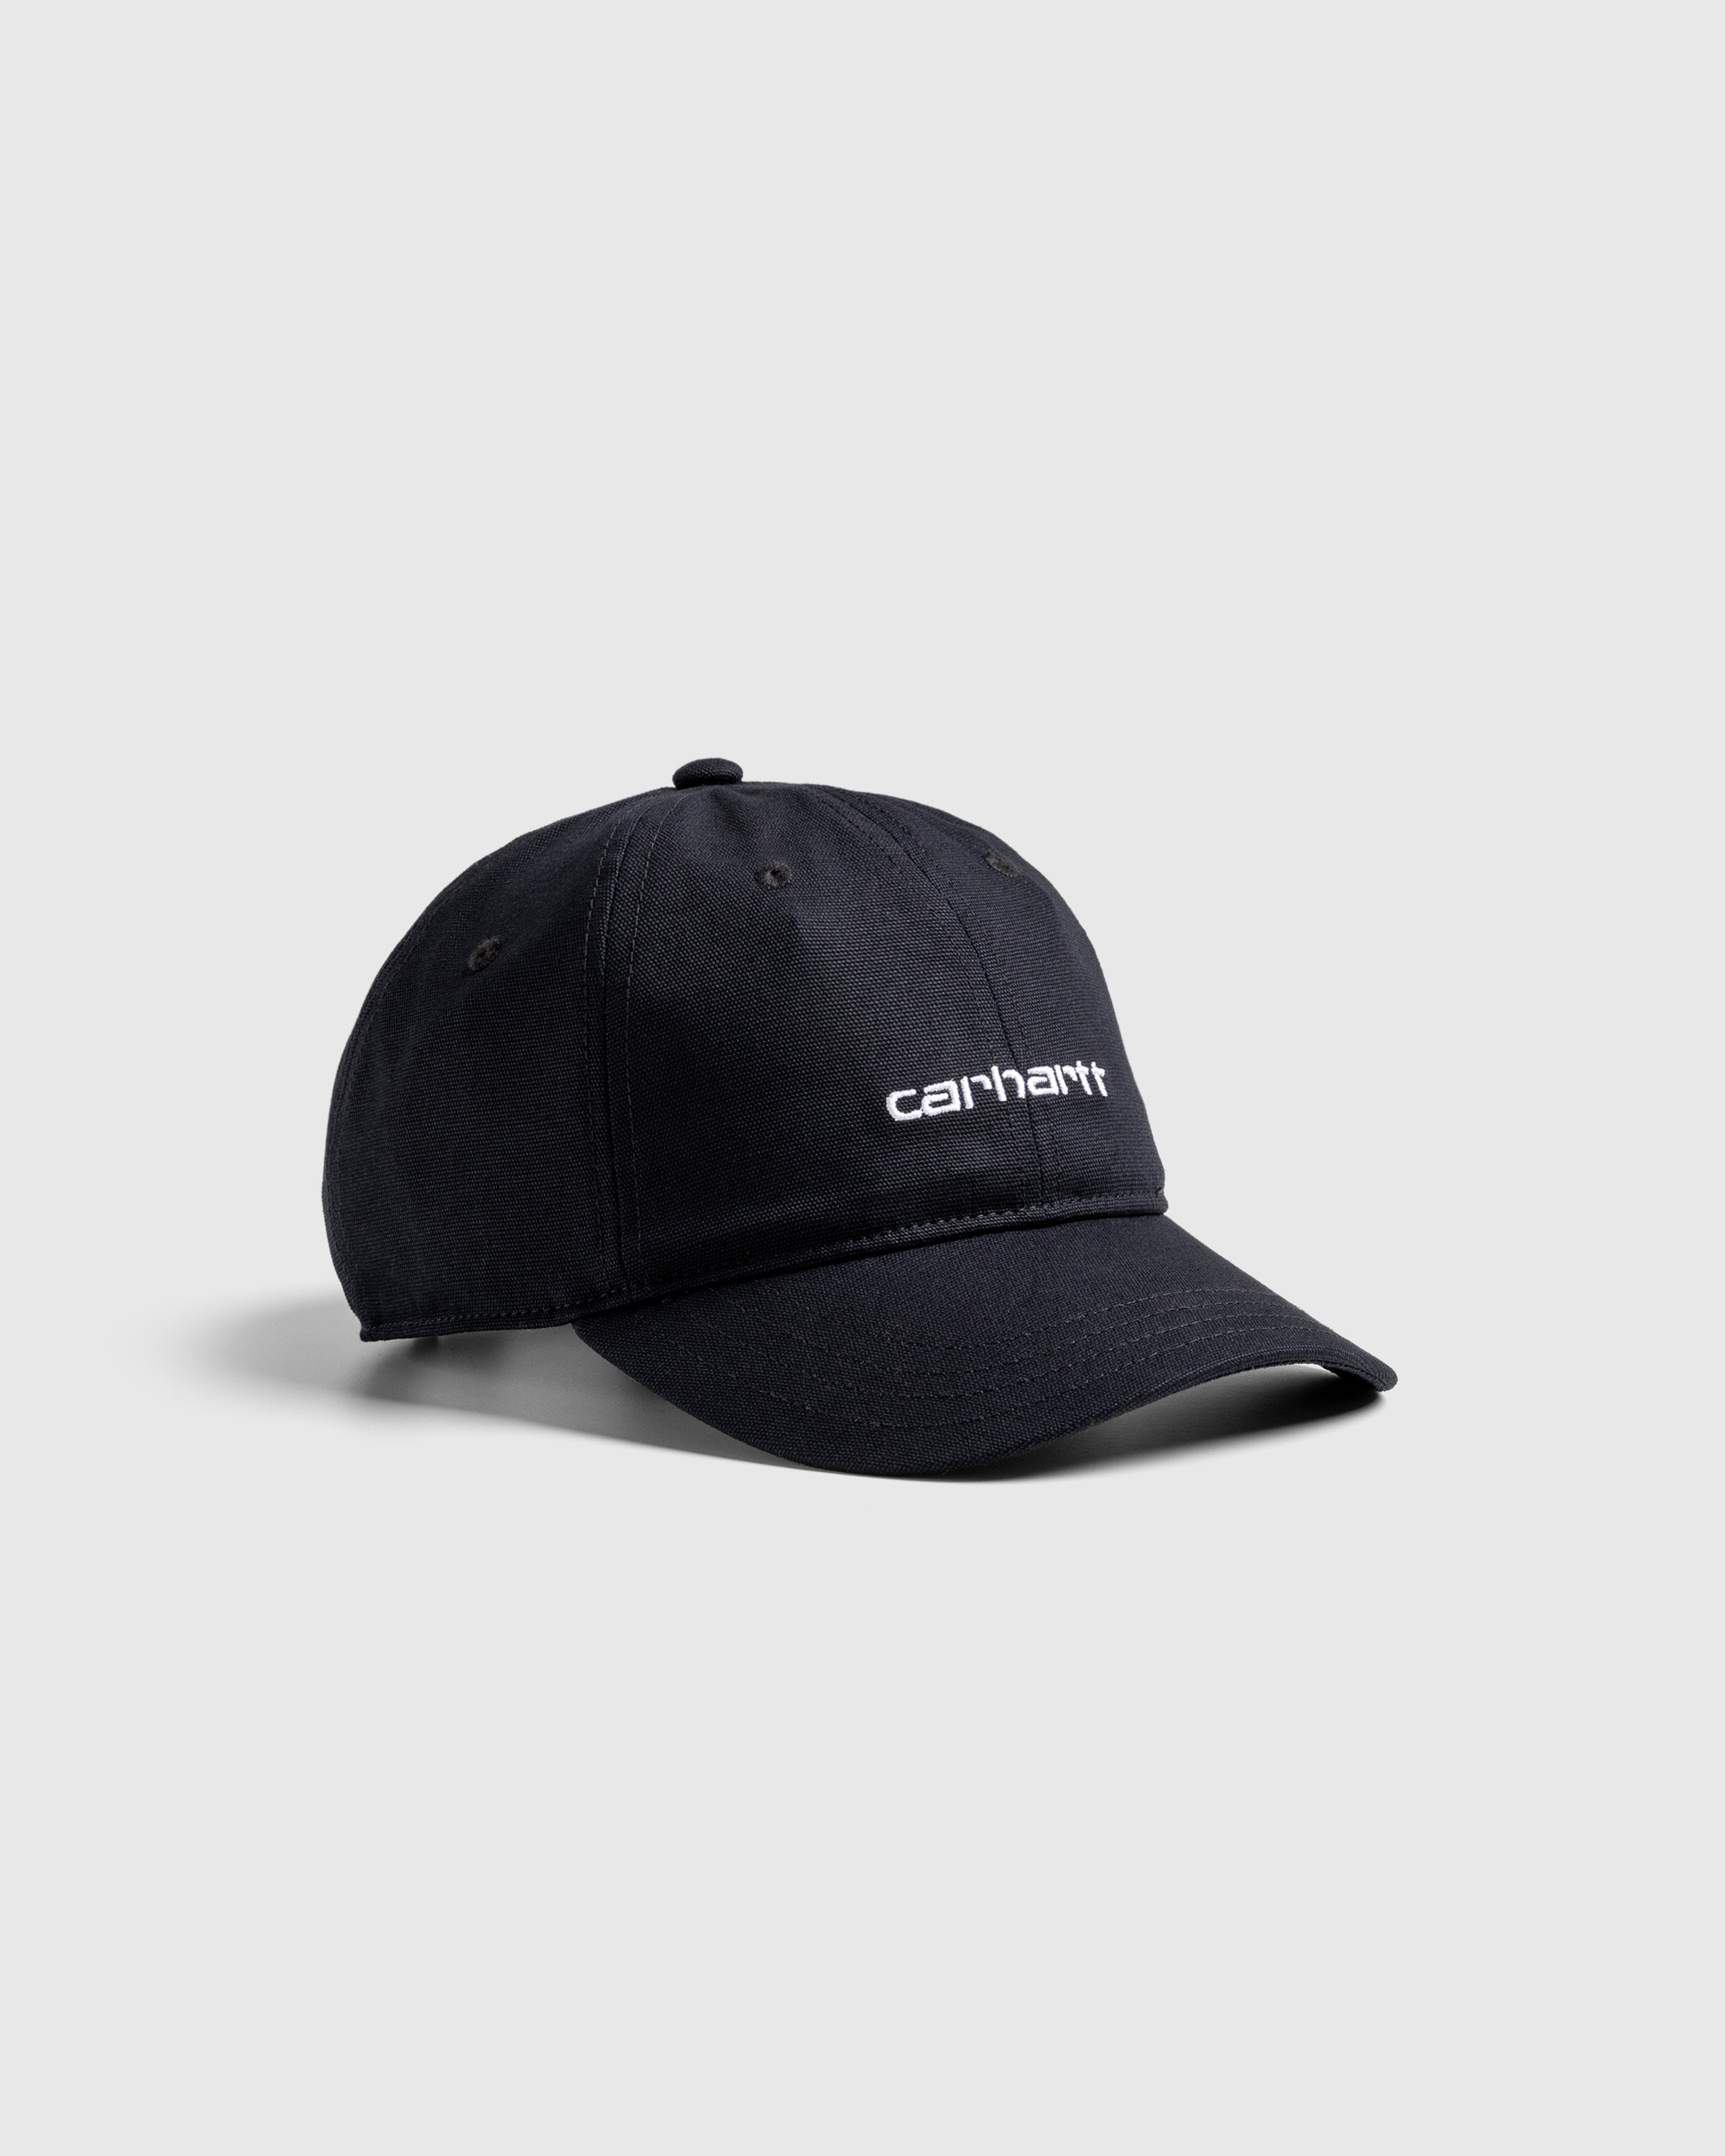 Carhartt WIP - Canvas Script Cap Black / White - Accessories - Black - Image 1